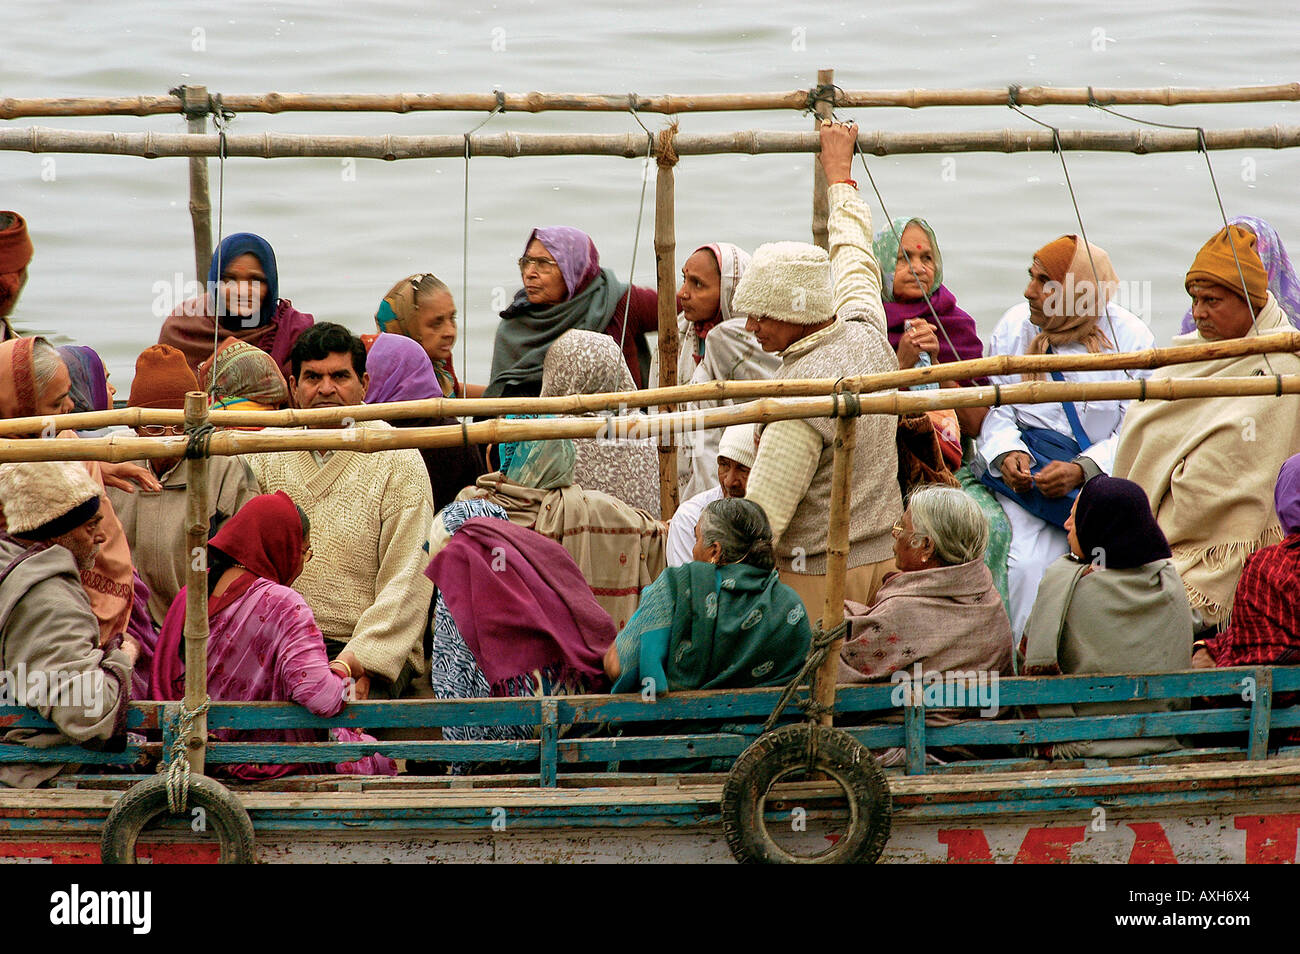 Pèlerins hindous venant à Varanasi Varanasi Inde par bateau Banque D'Images